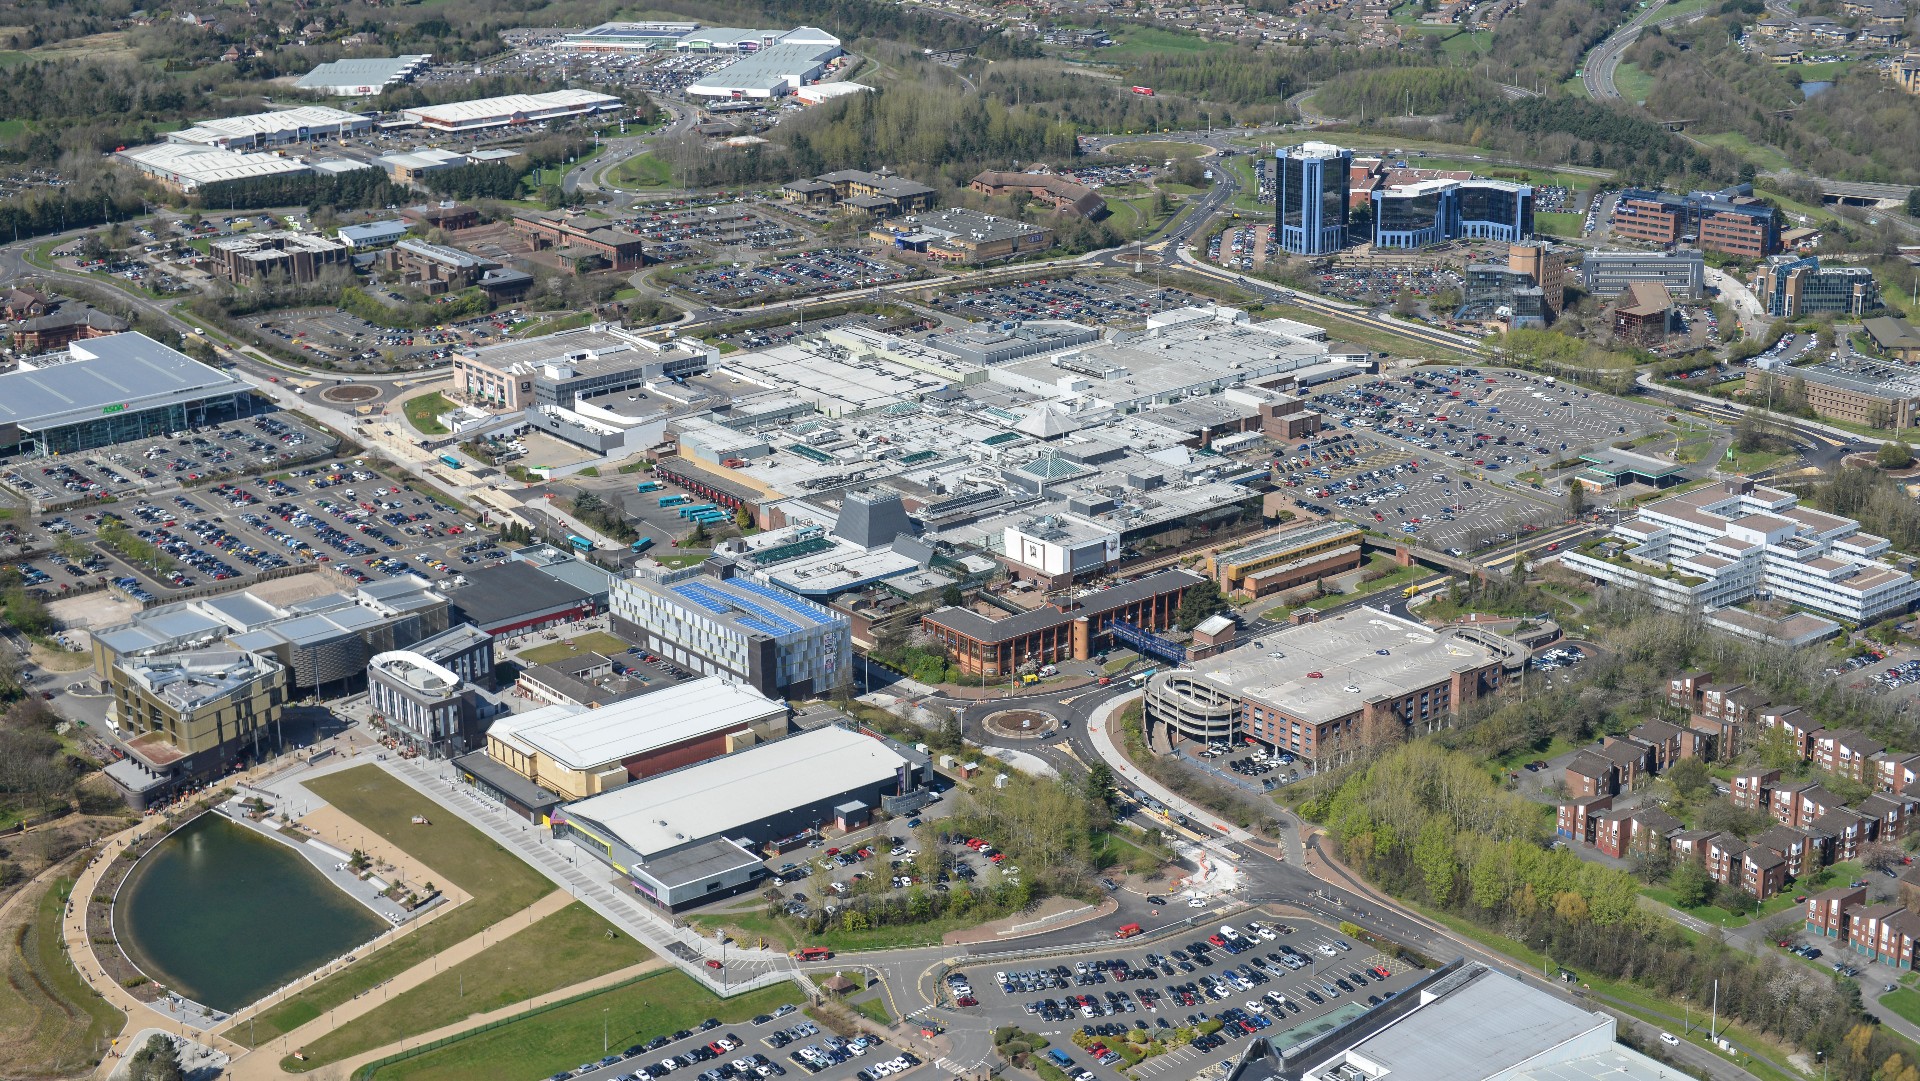 Telford aerial view